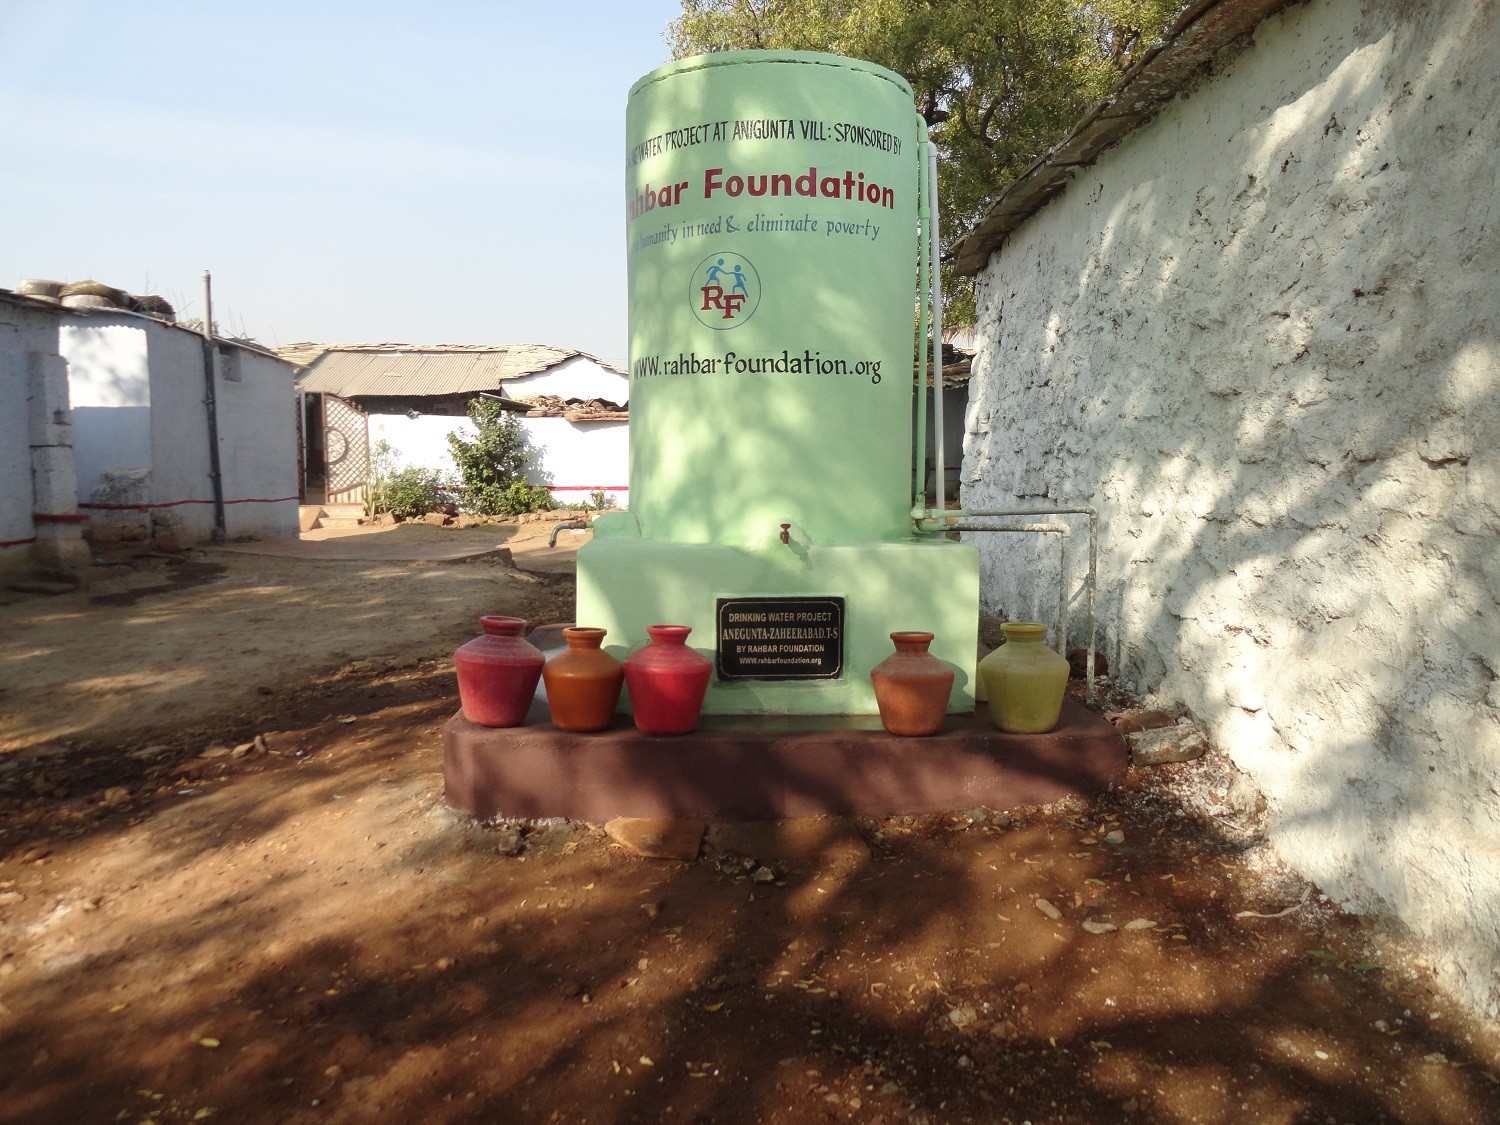 Drinking Water Project at Anigunta Village, Telangana